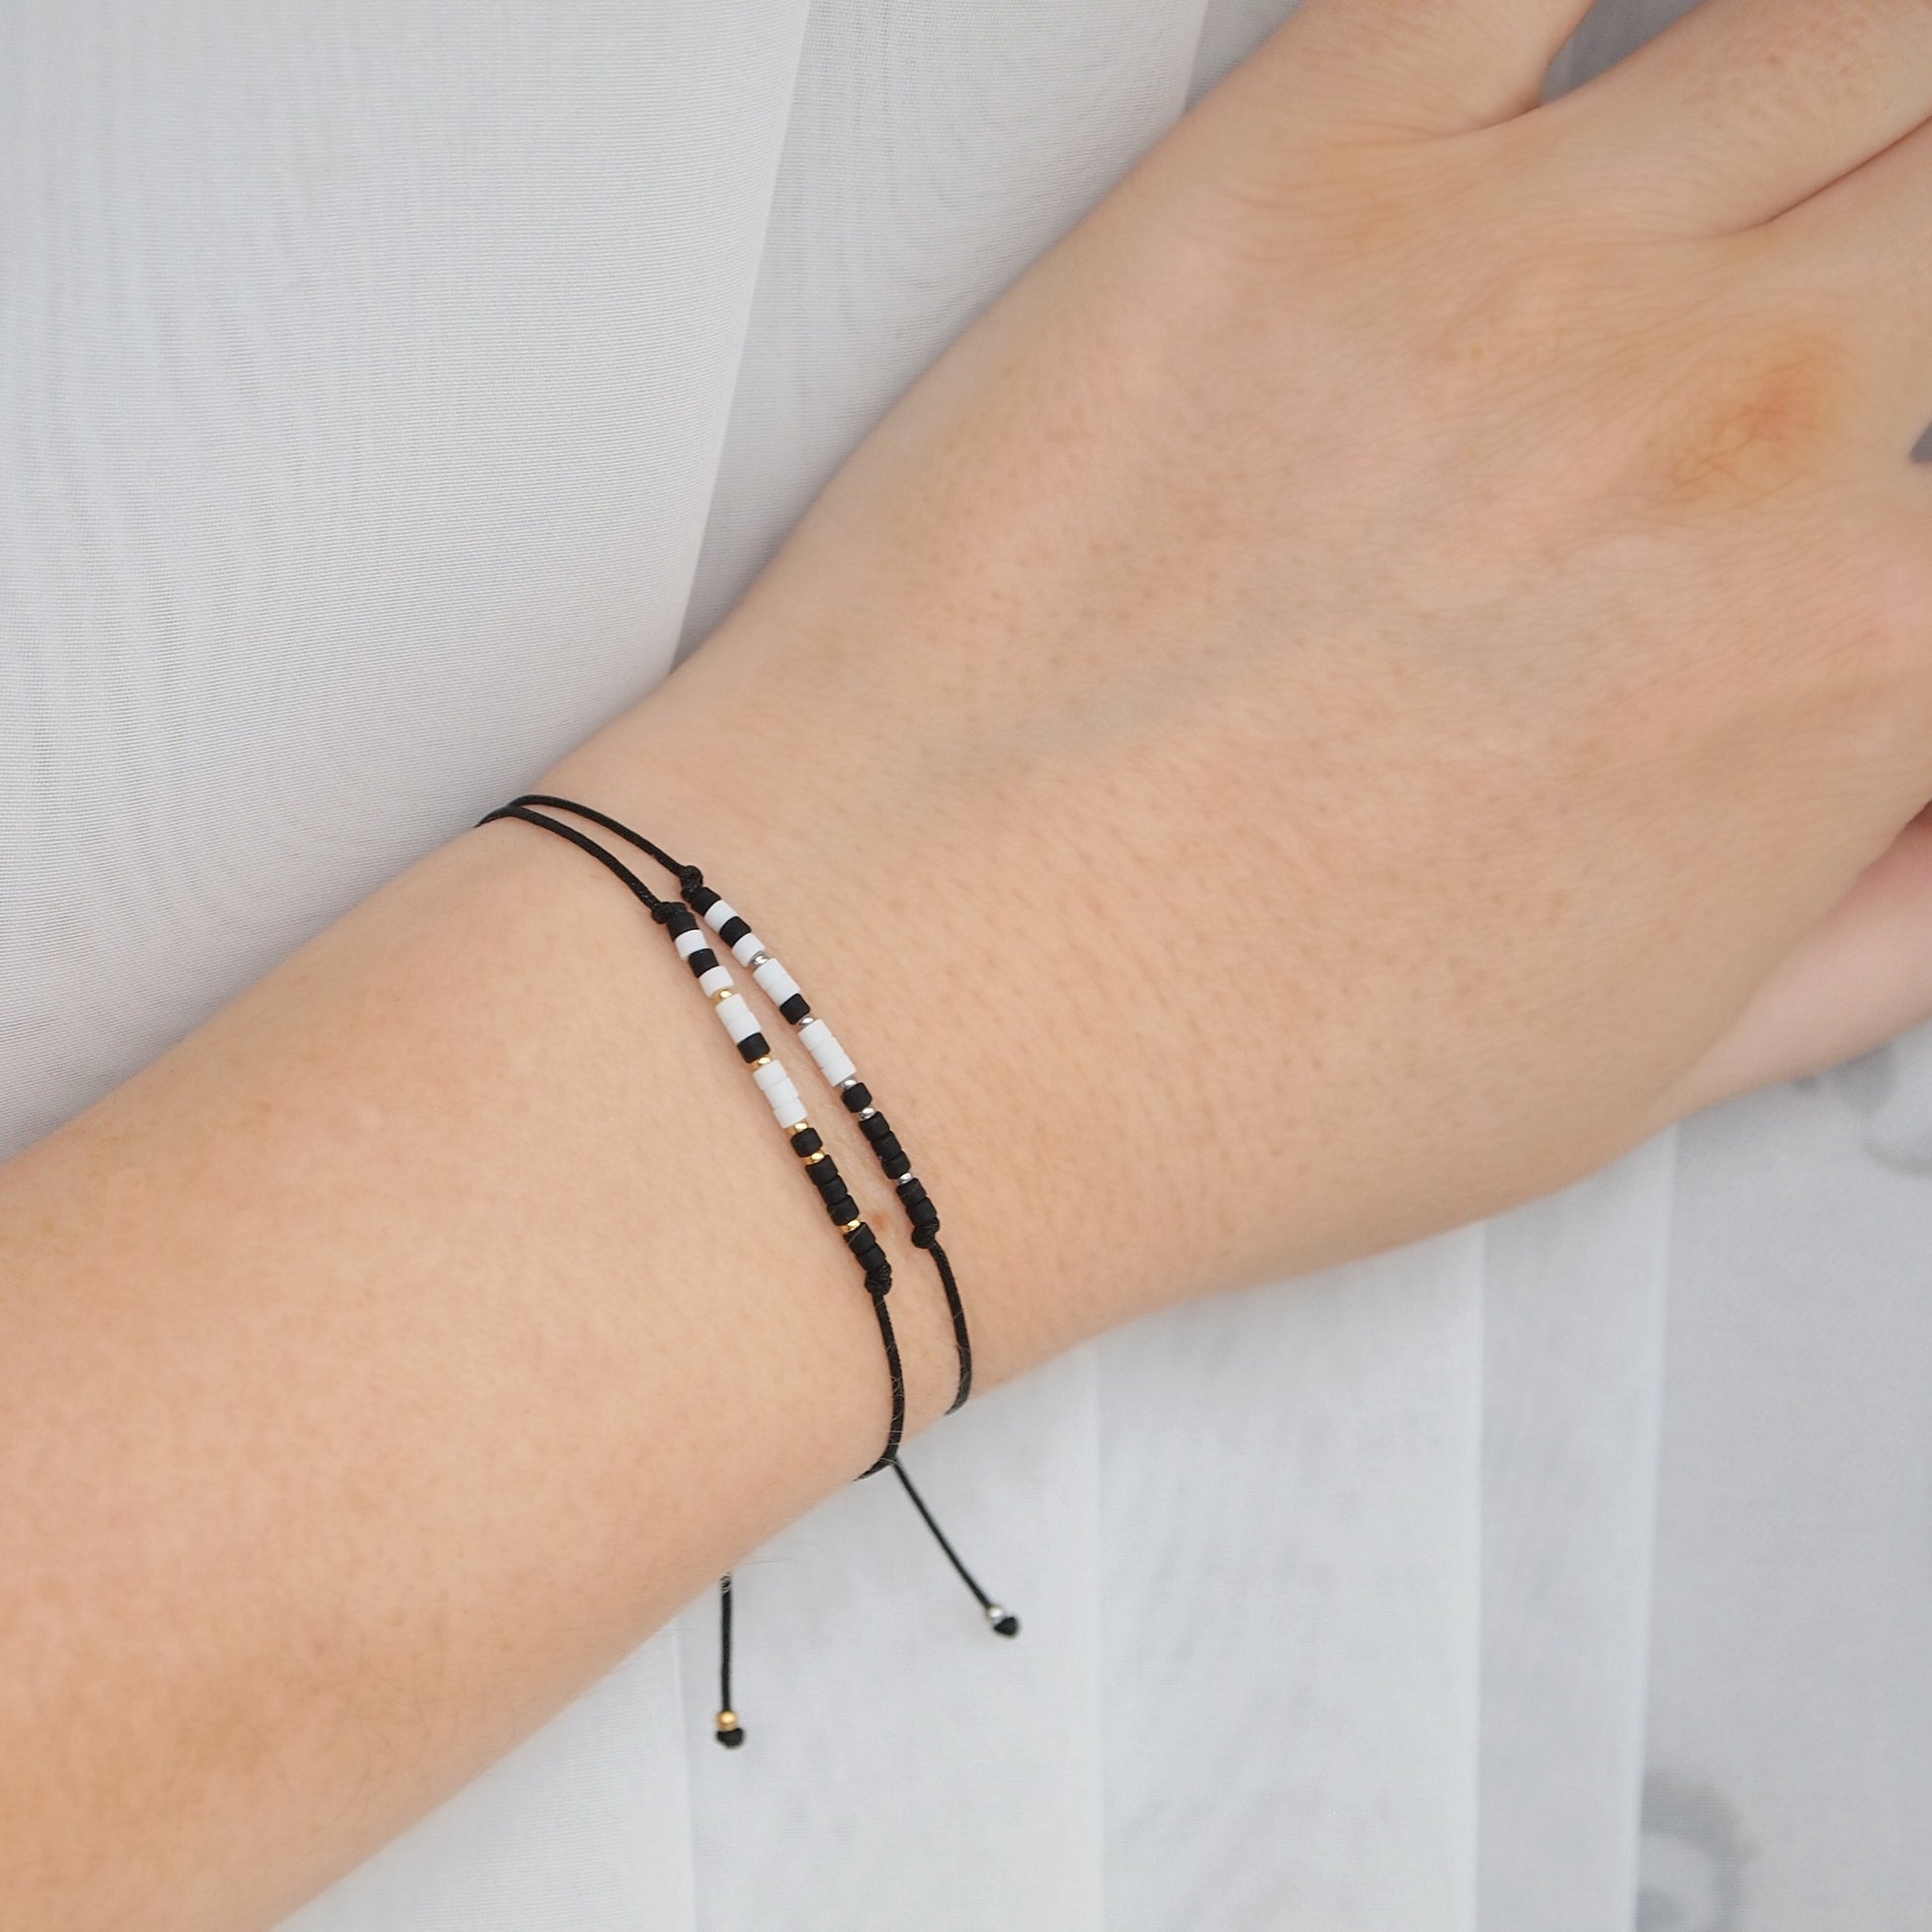 dainty copules bracelets with secret messagy, boyfriend gift idea